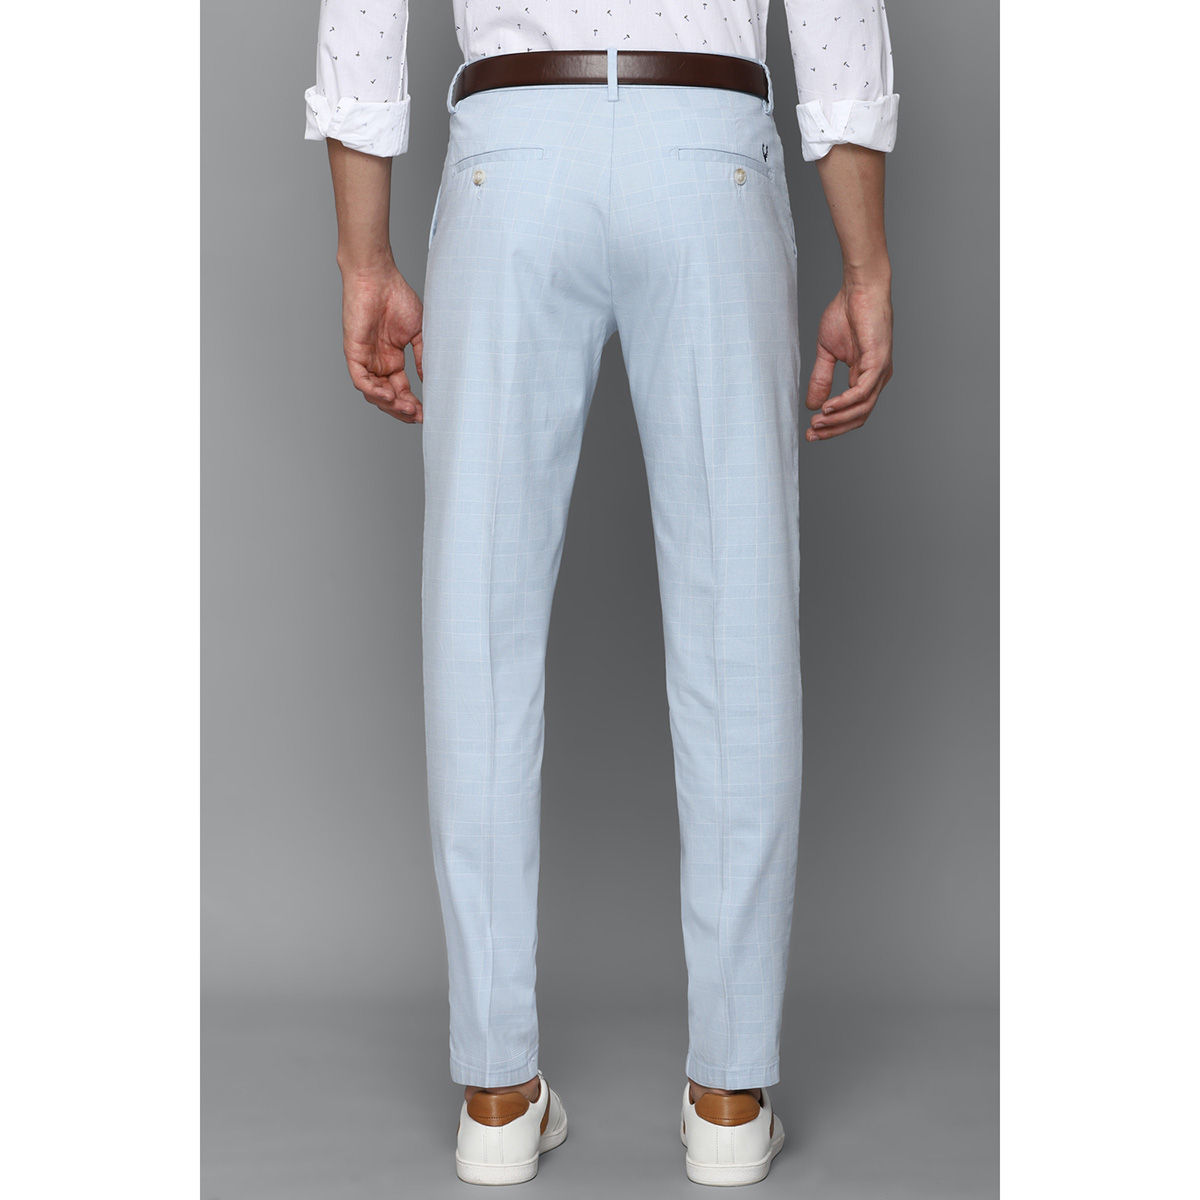 Buy Men Slim Fit Trousers online  Looksgudin